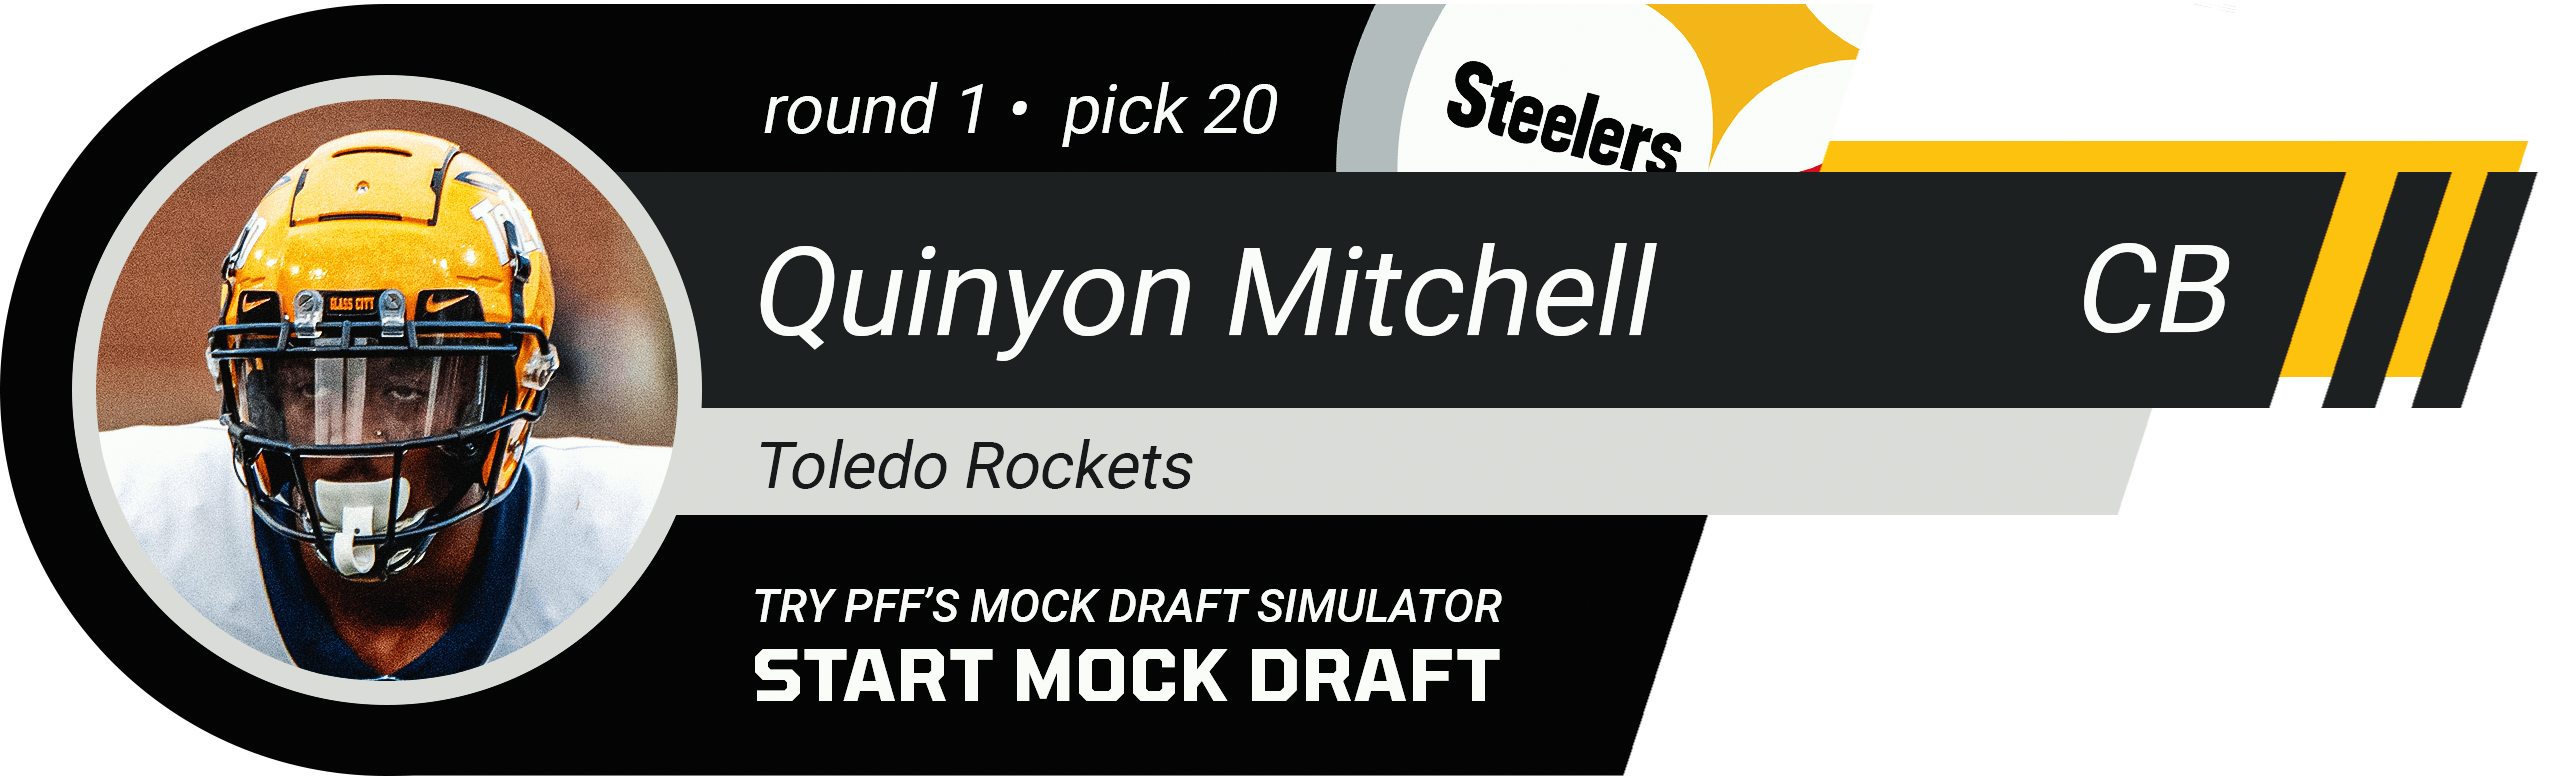 Pittsburgh Steelers: Quinyon Mitchell, CB, Toledo